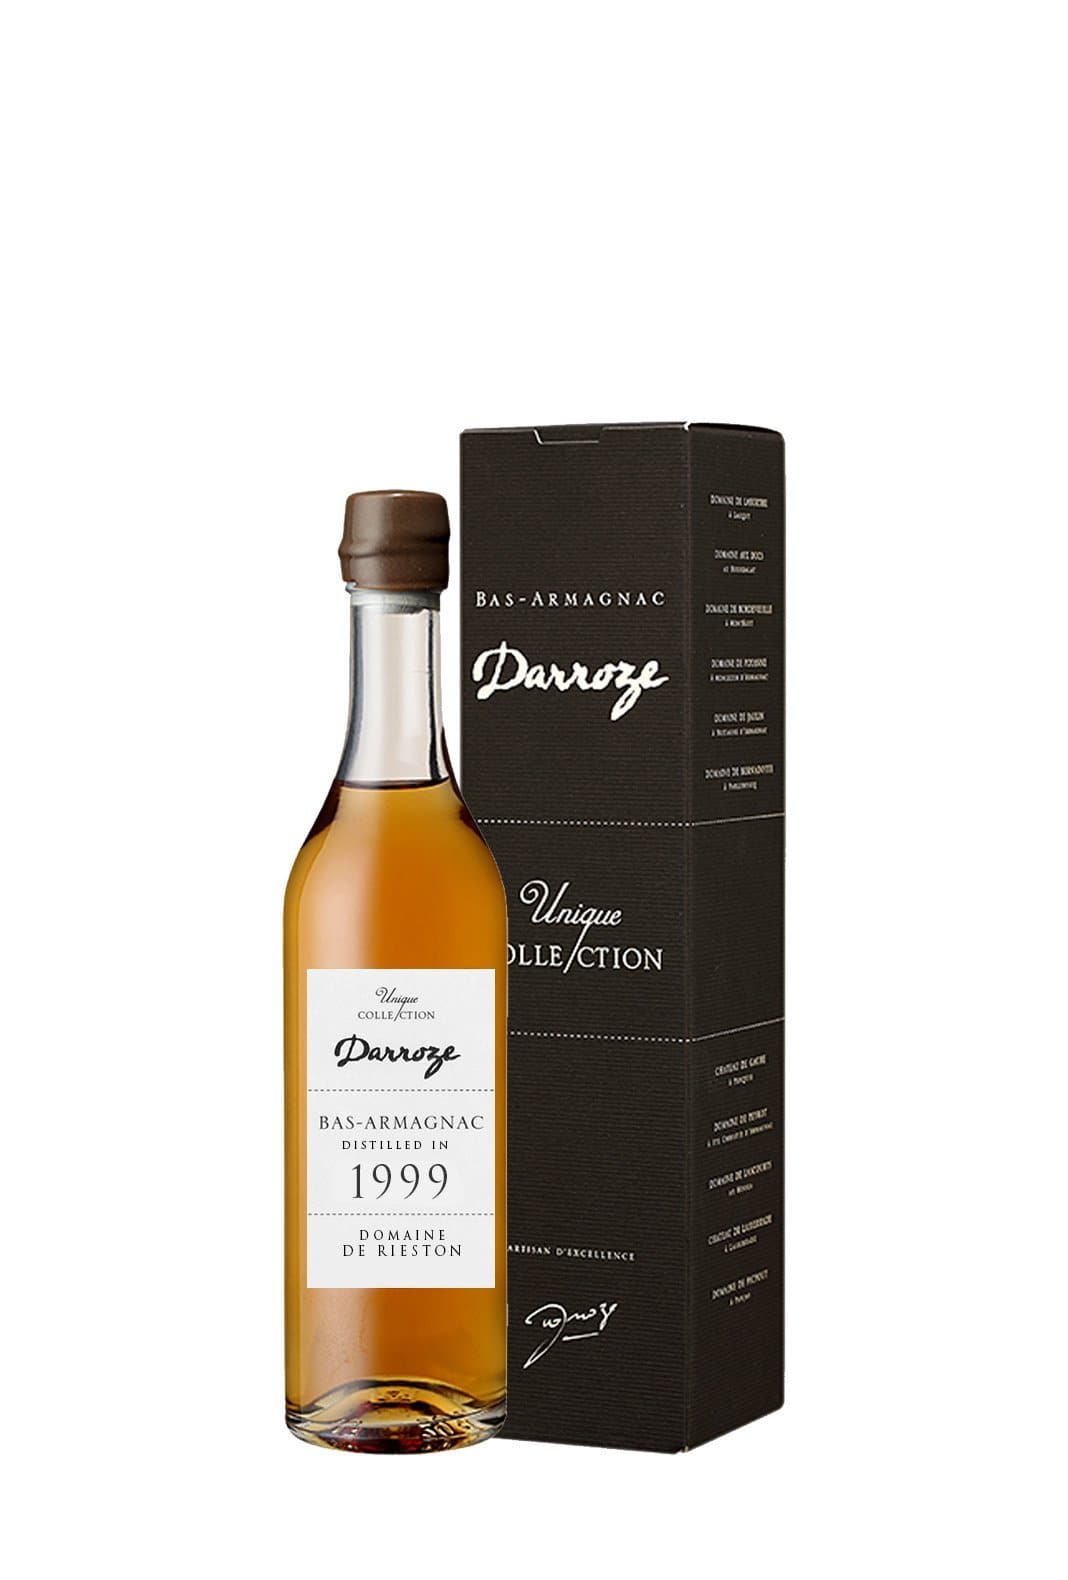 Darroze 1999 Rieston Bas Armagnac 50% 200ml | Brandy | Shop online at Spirits of France